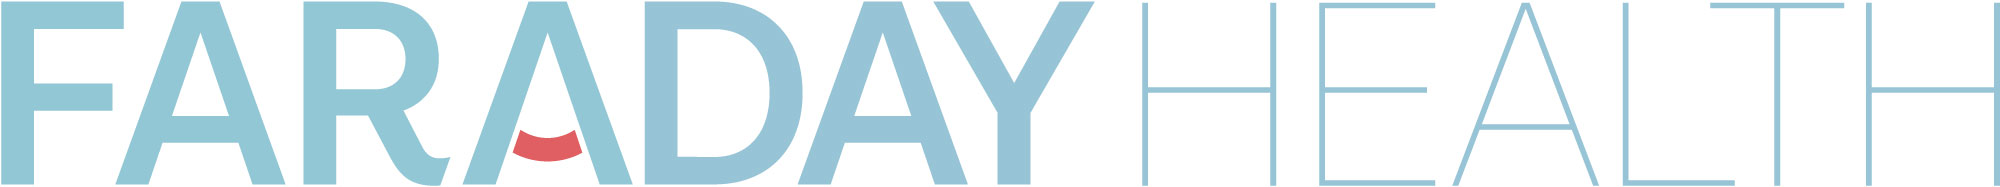 Faraday Health logo